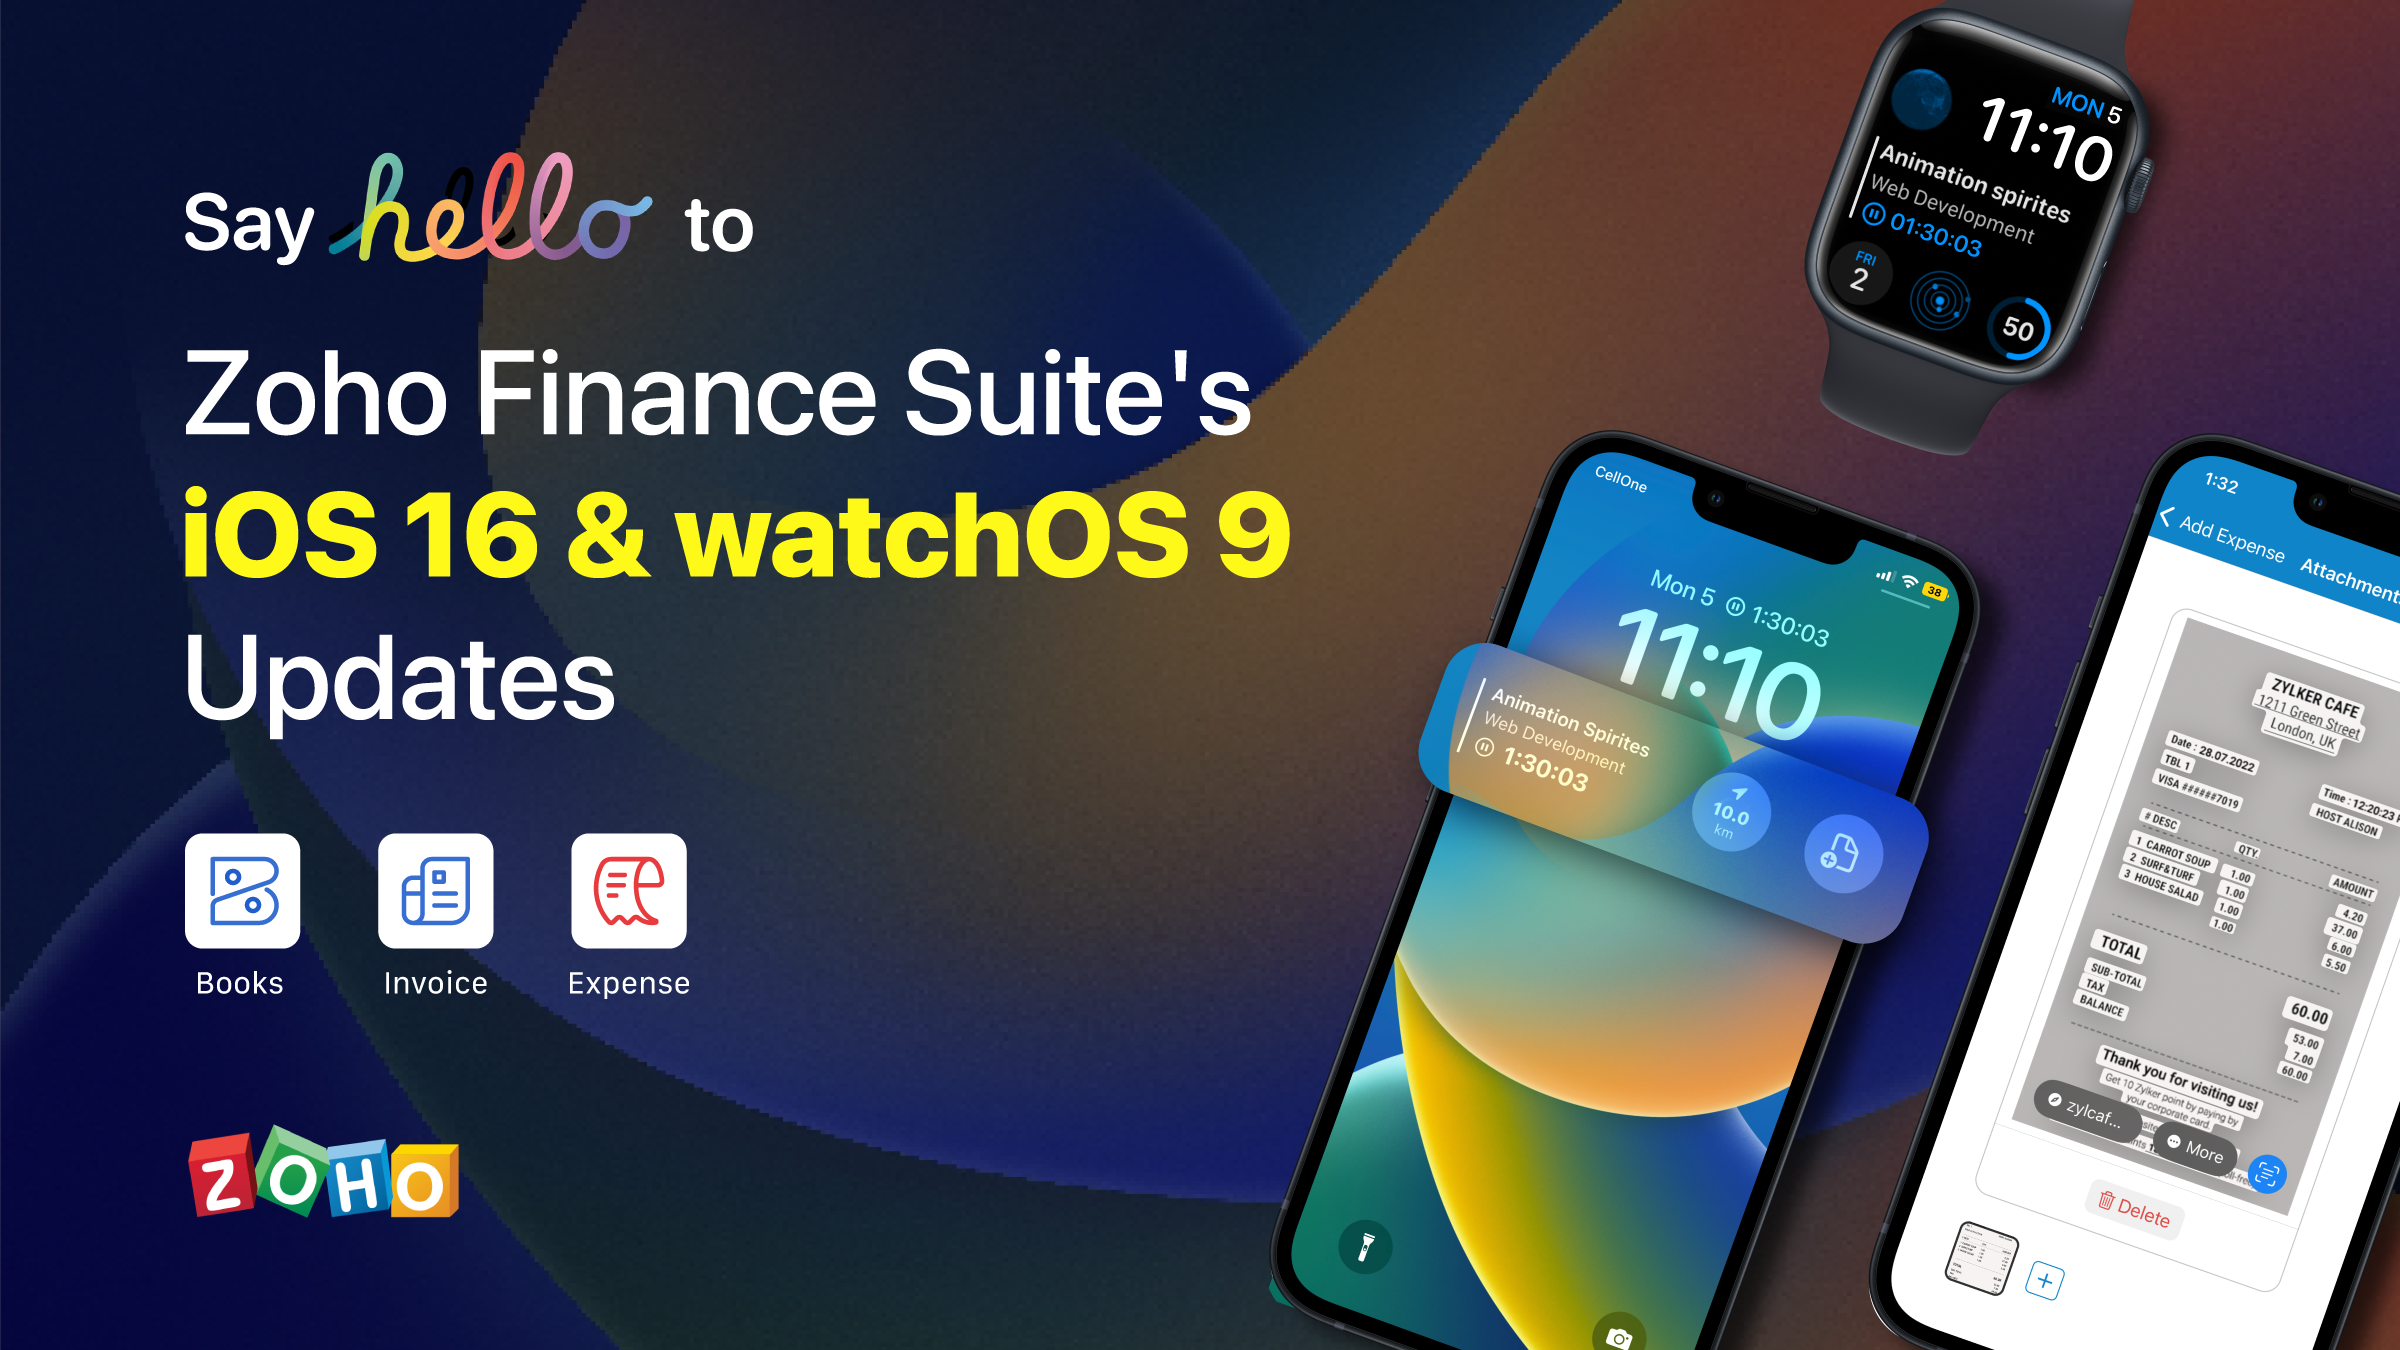 Zoho Finance Suite's iOS 16 Updates